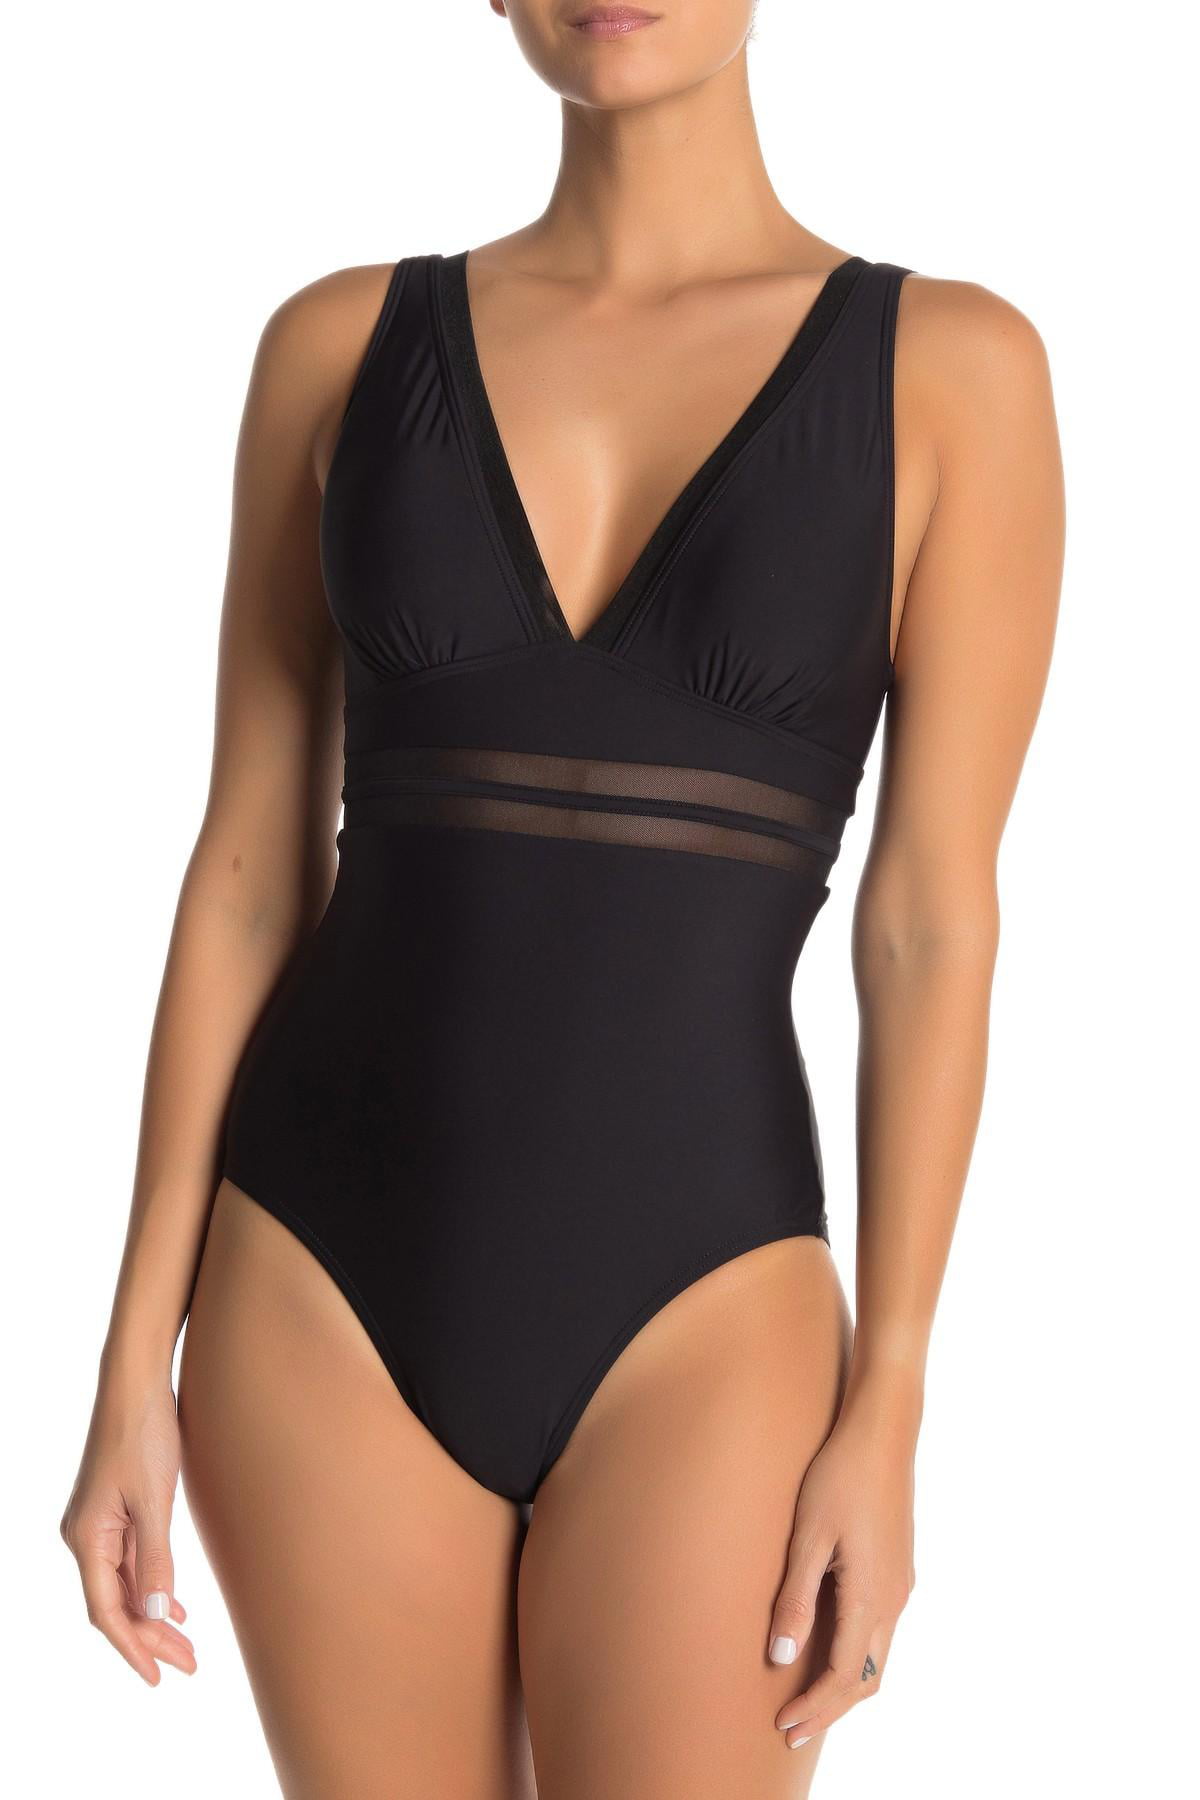 Tommy Hilfiger BLACK Mesh-Trim Plunge One-Piece Swimsuit, US - Walmart.com